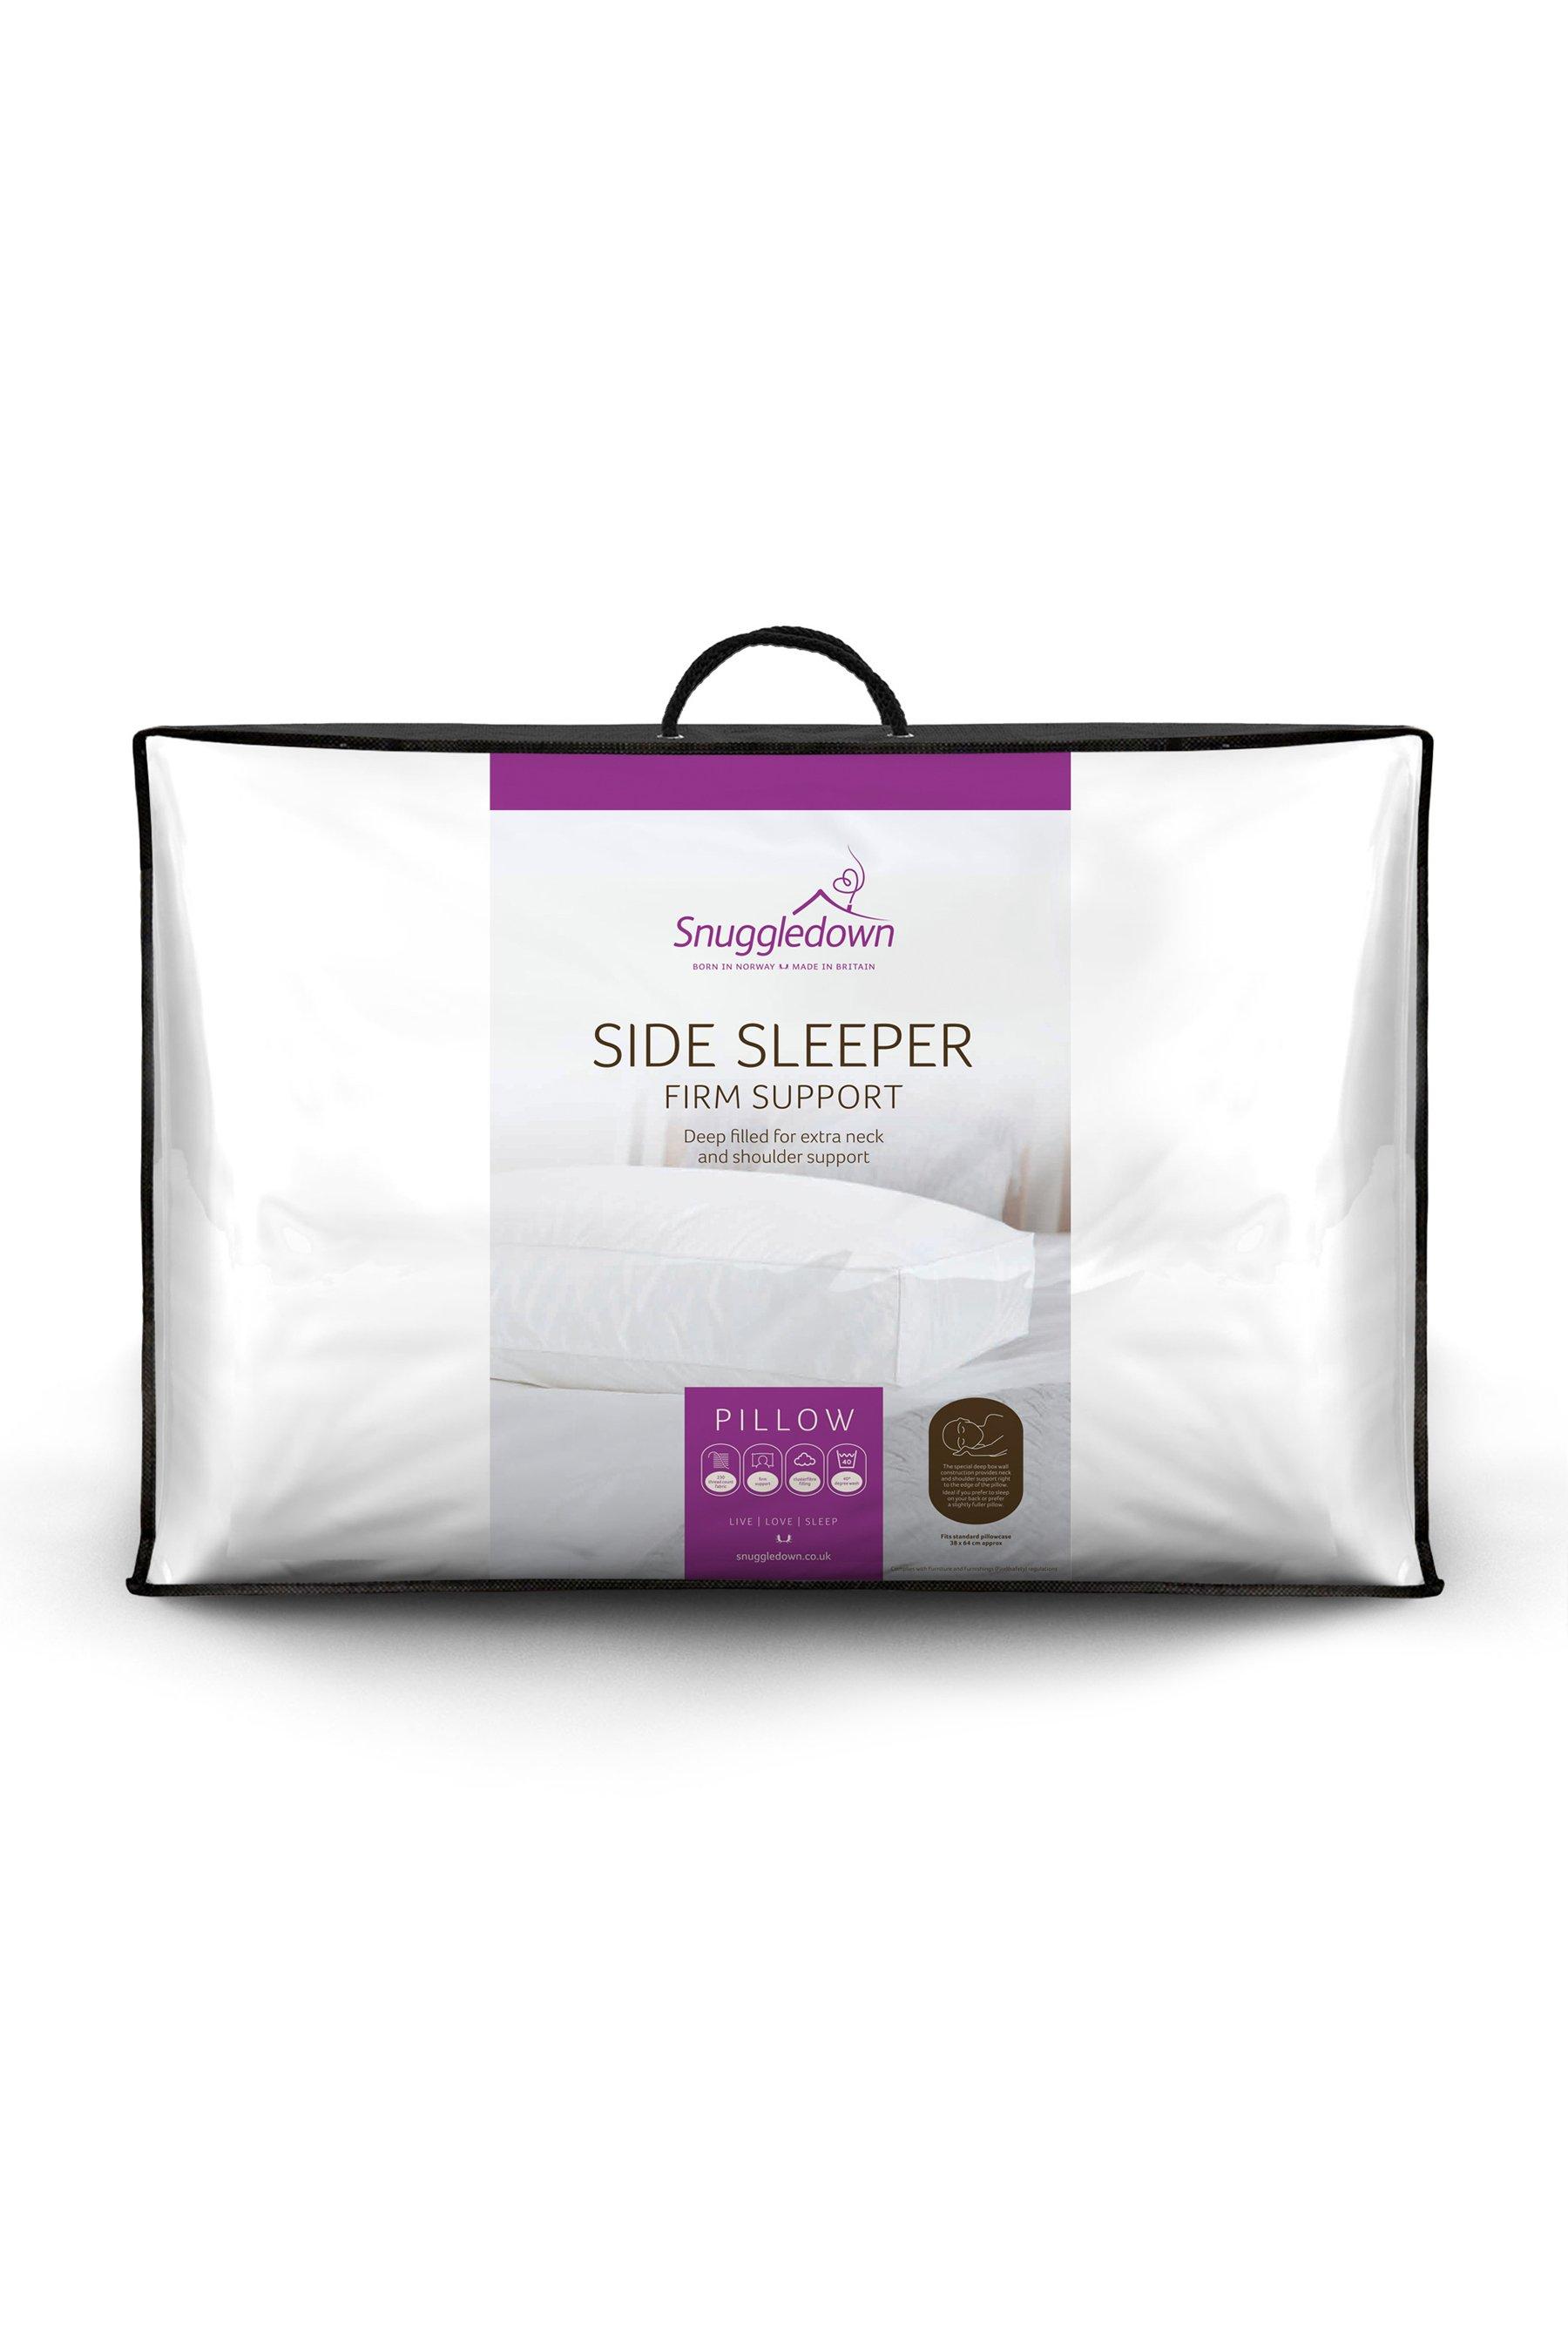 slumberdown side sleeper pillow